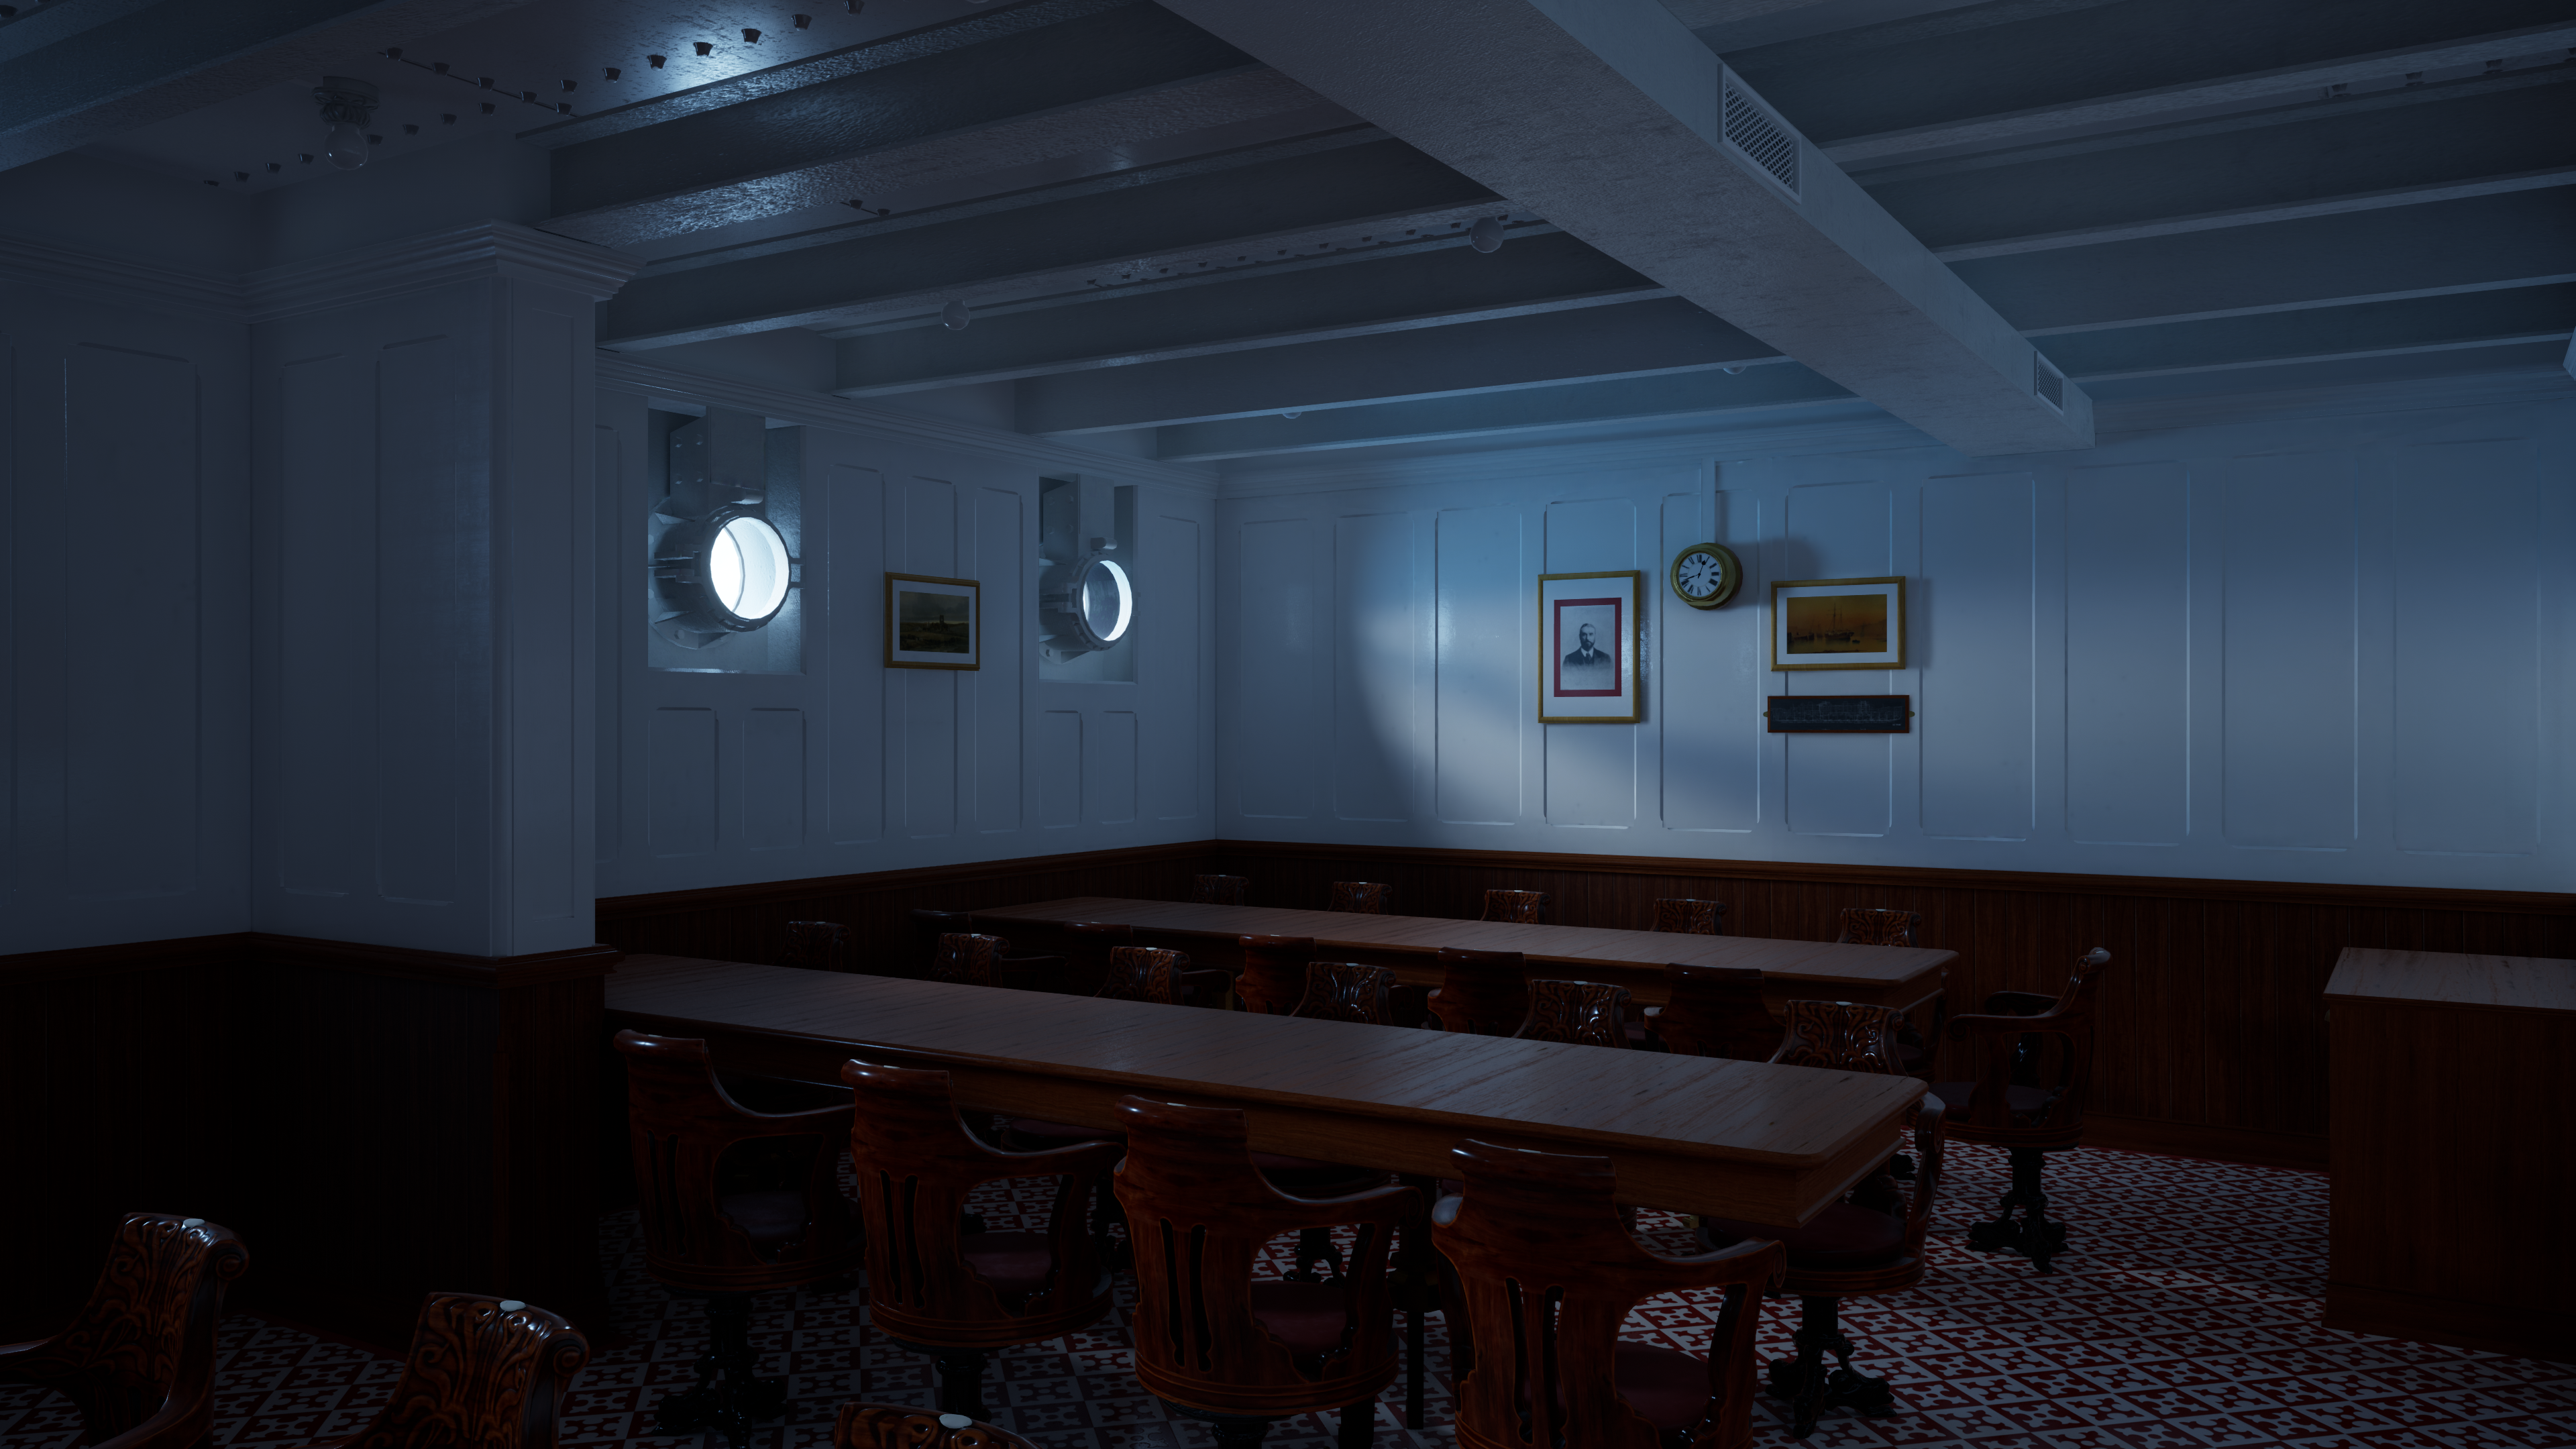 General 3840x2160 Nvidia RTX Titanic CGI digital art interior table chair clocks picture frames